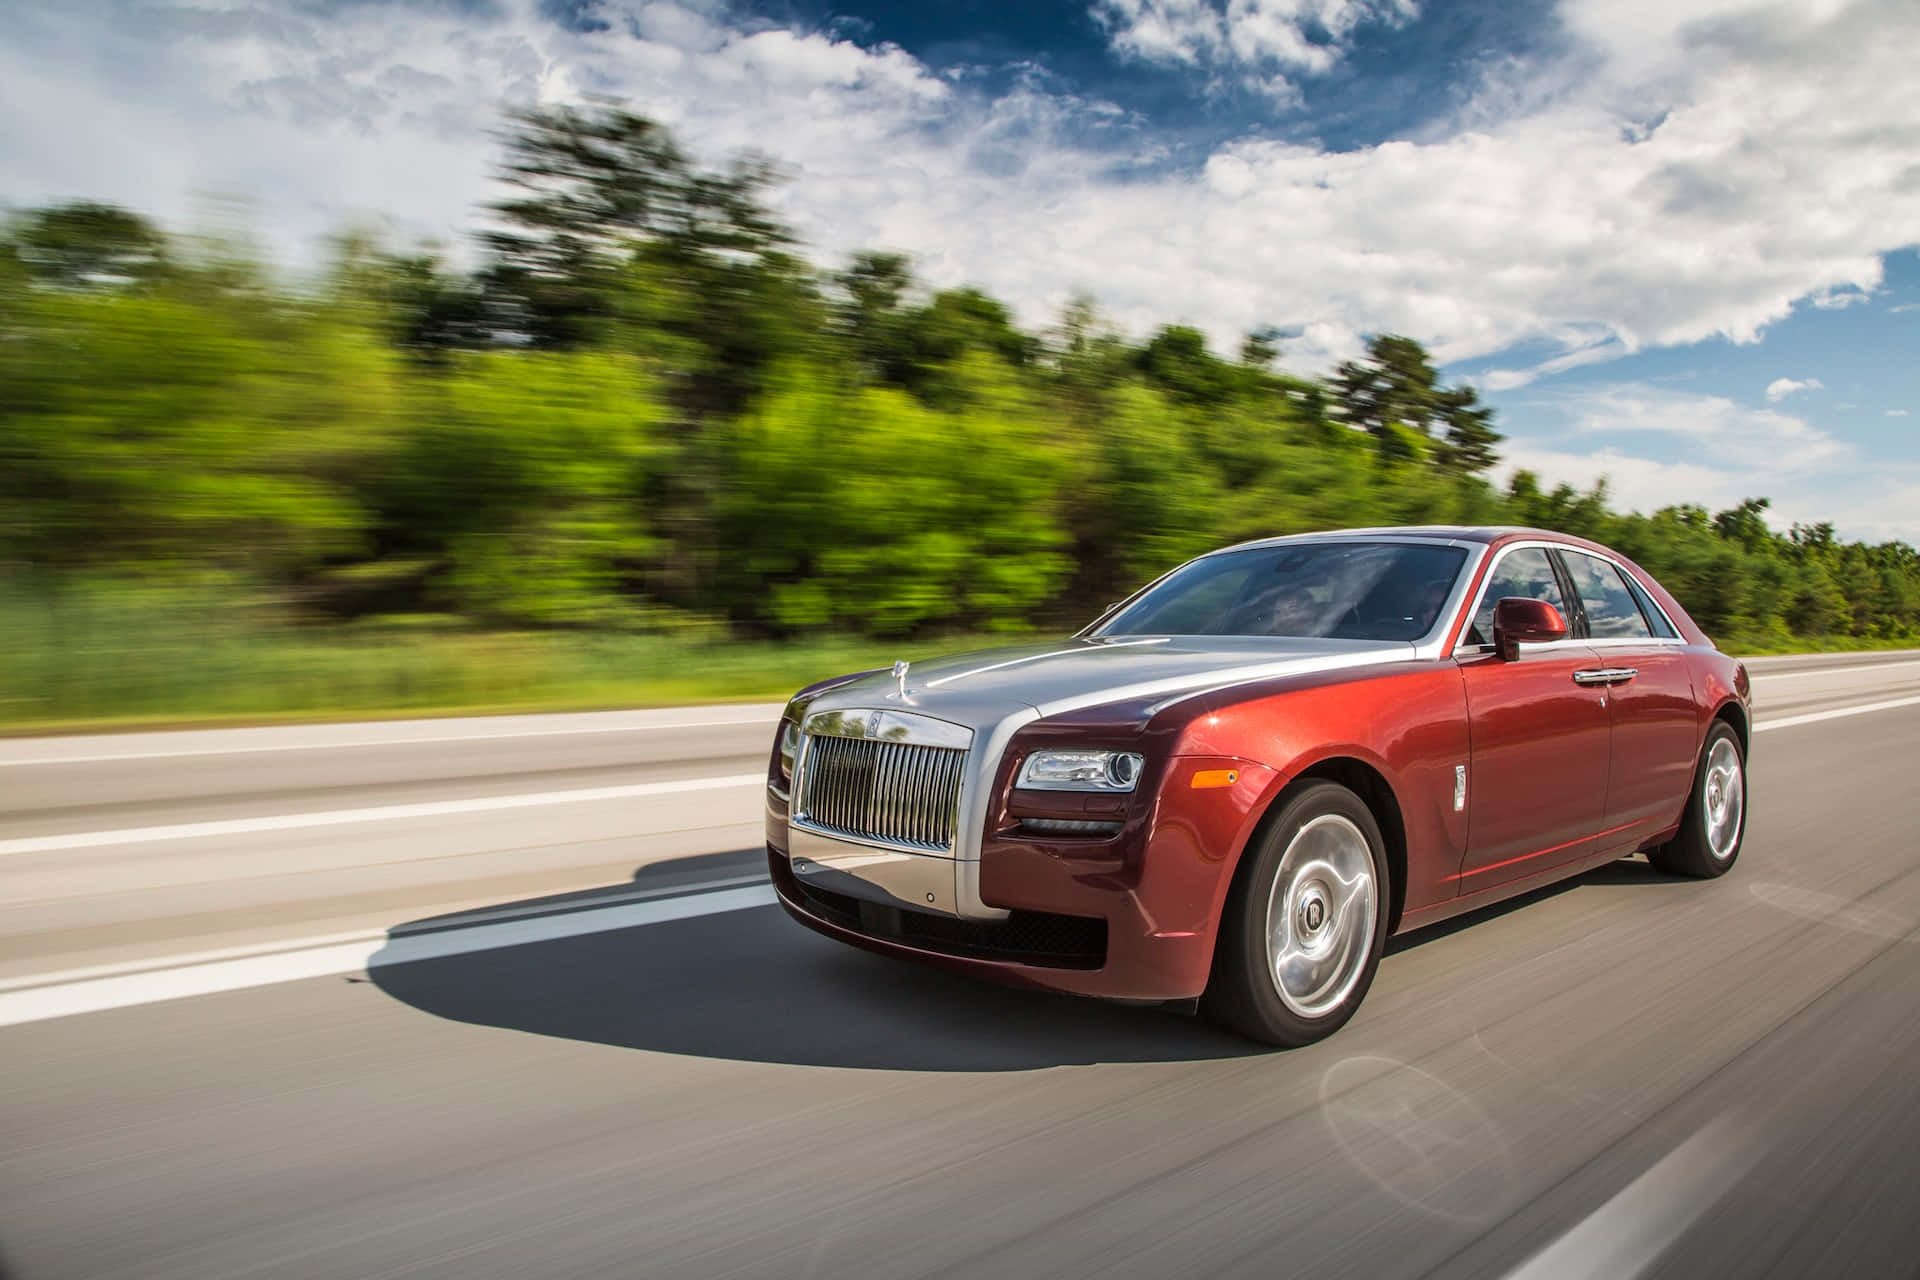 Luxury Rolls-Royce Phantom on the Road